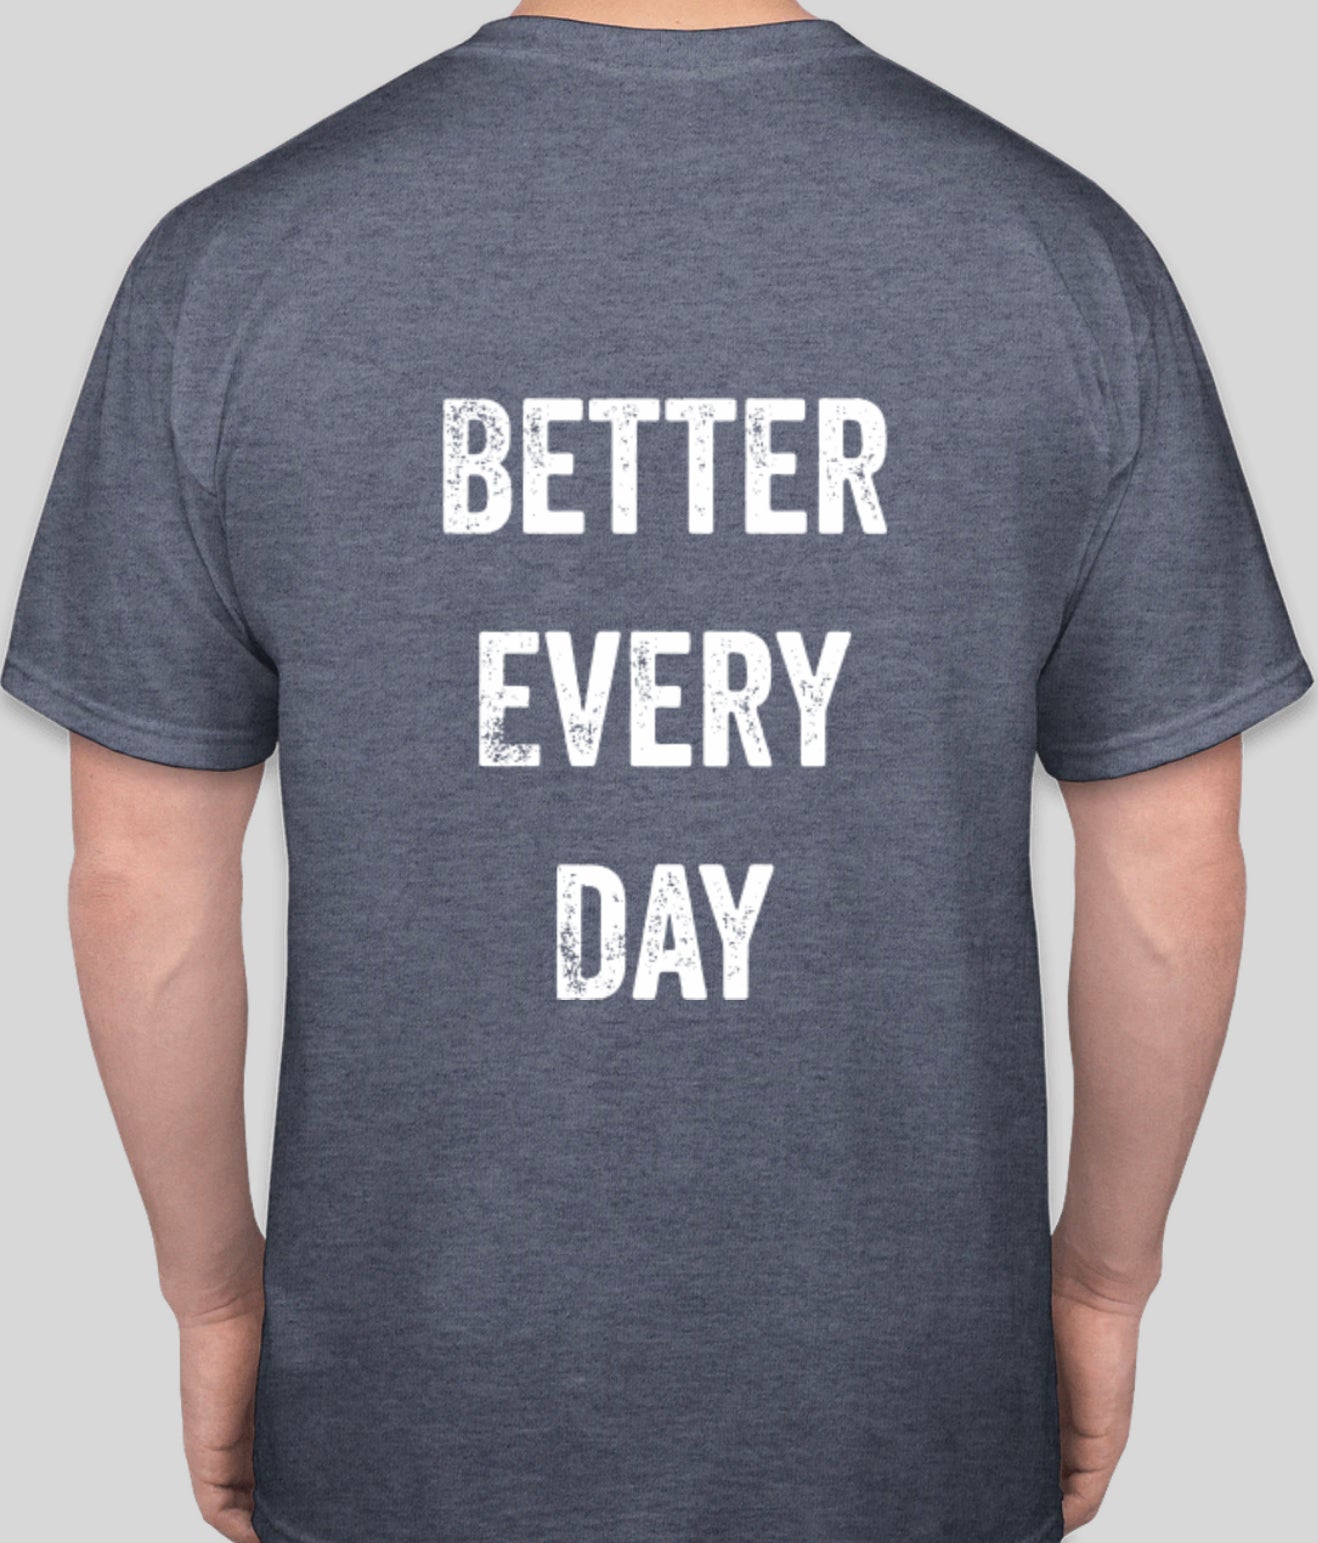 BFA “Better Every Day” Original Short Sleeve Tee